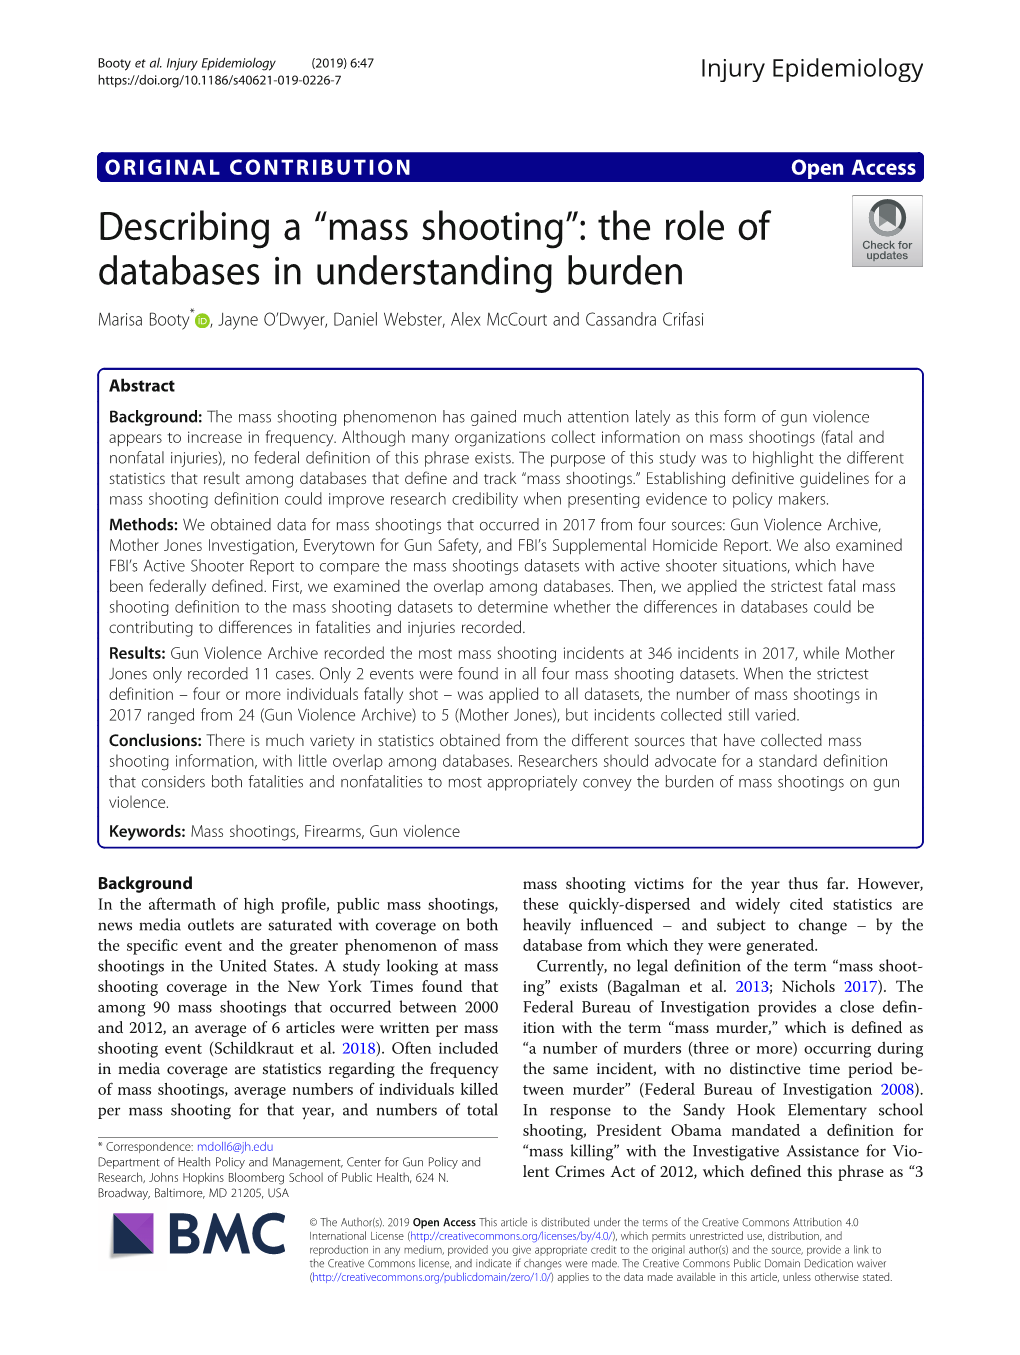 Mass Shooting”: the Role of Databases in Understanding Burden Marisa Booty* , Jayne O’Dwyer, Daniel Webster, Alex Mccourt and Cassandra Crifasi